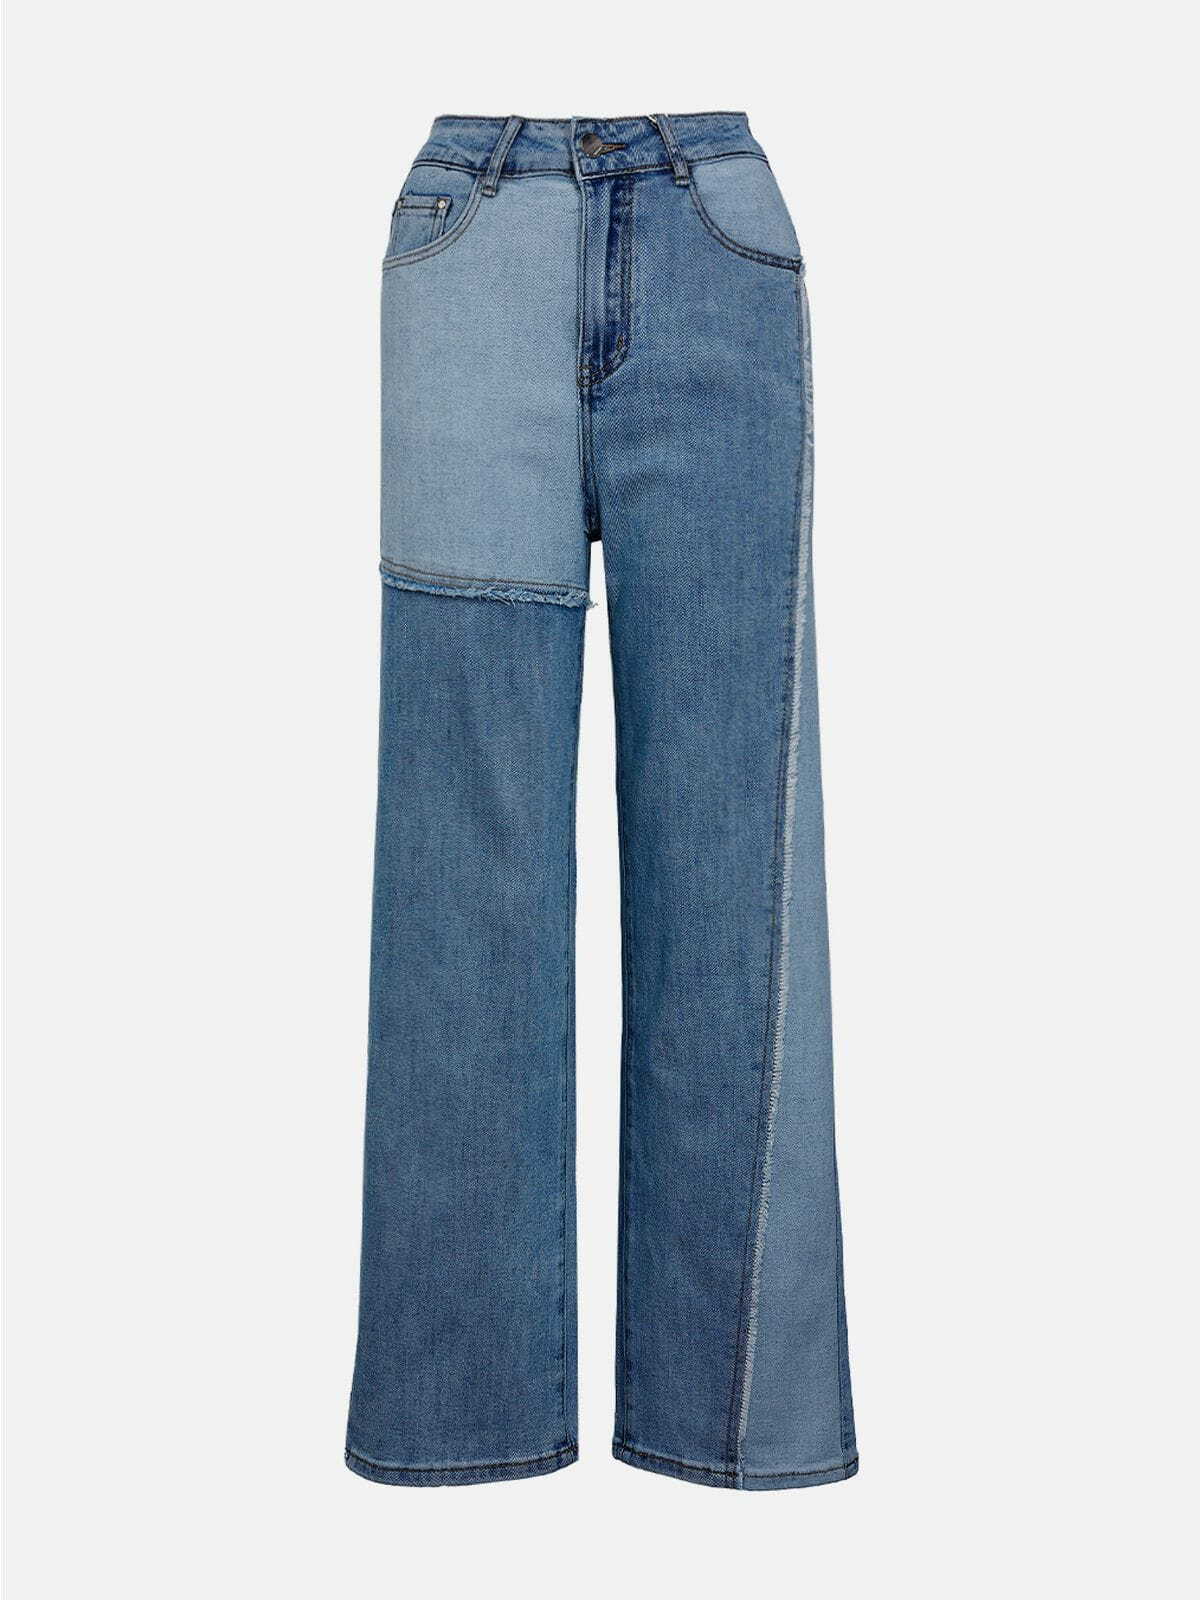 revolutionary patchwork jeans edgy & sleek streetwear 8892